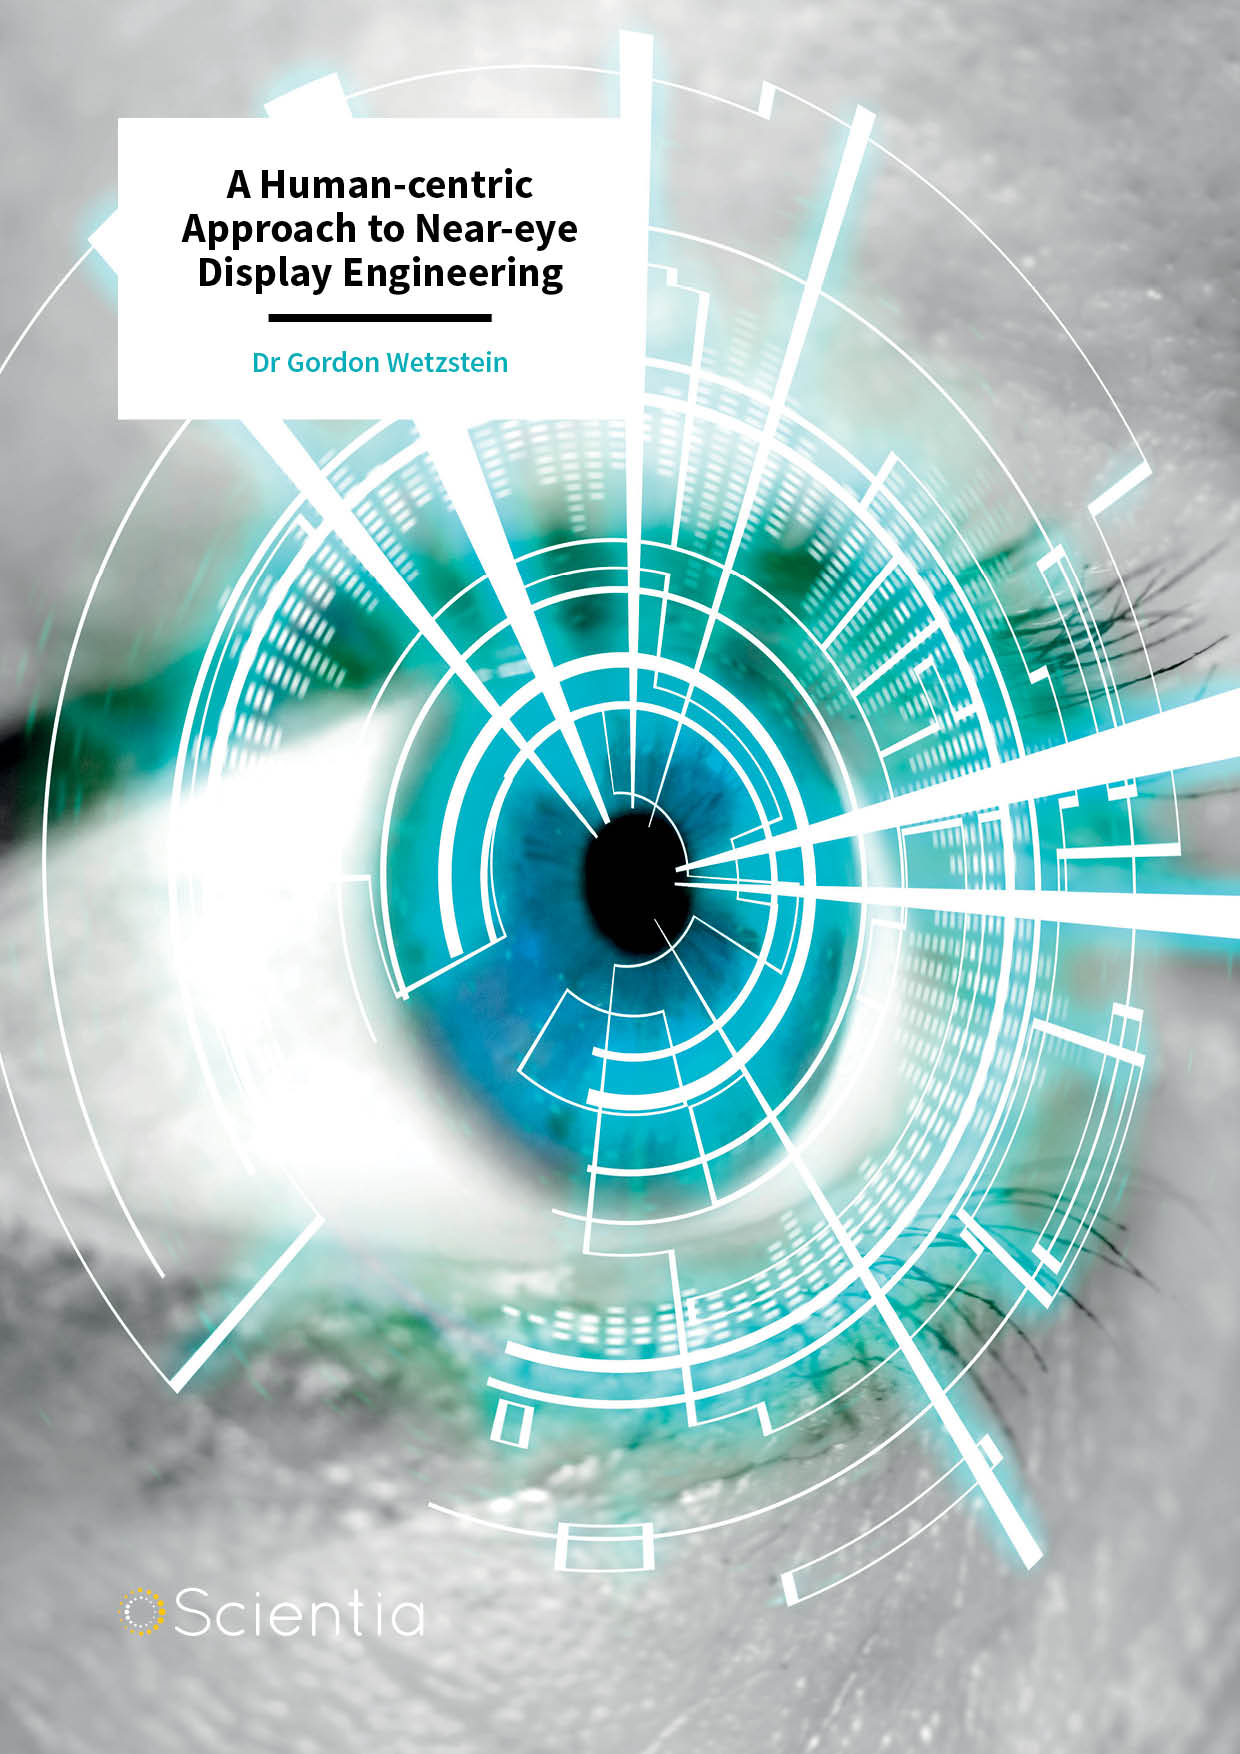 Dr Gordon Wetzstein – A Human-centric Approach to Near-eye Display Engineering